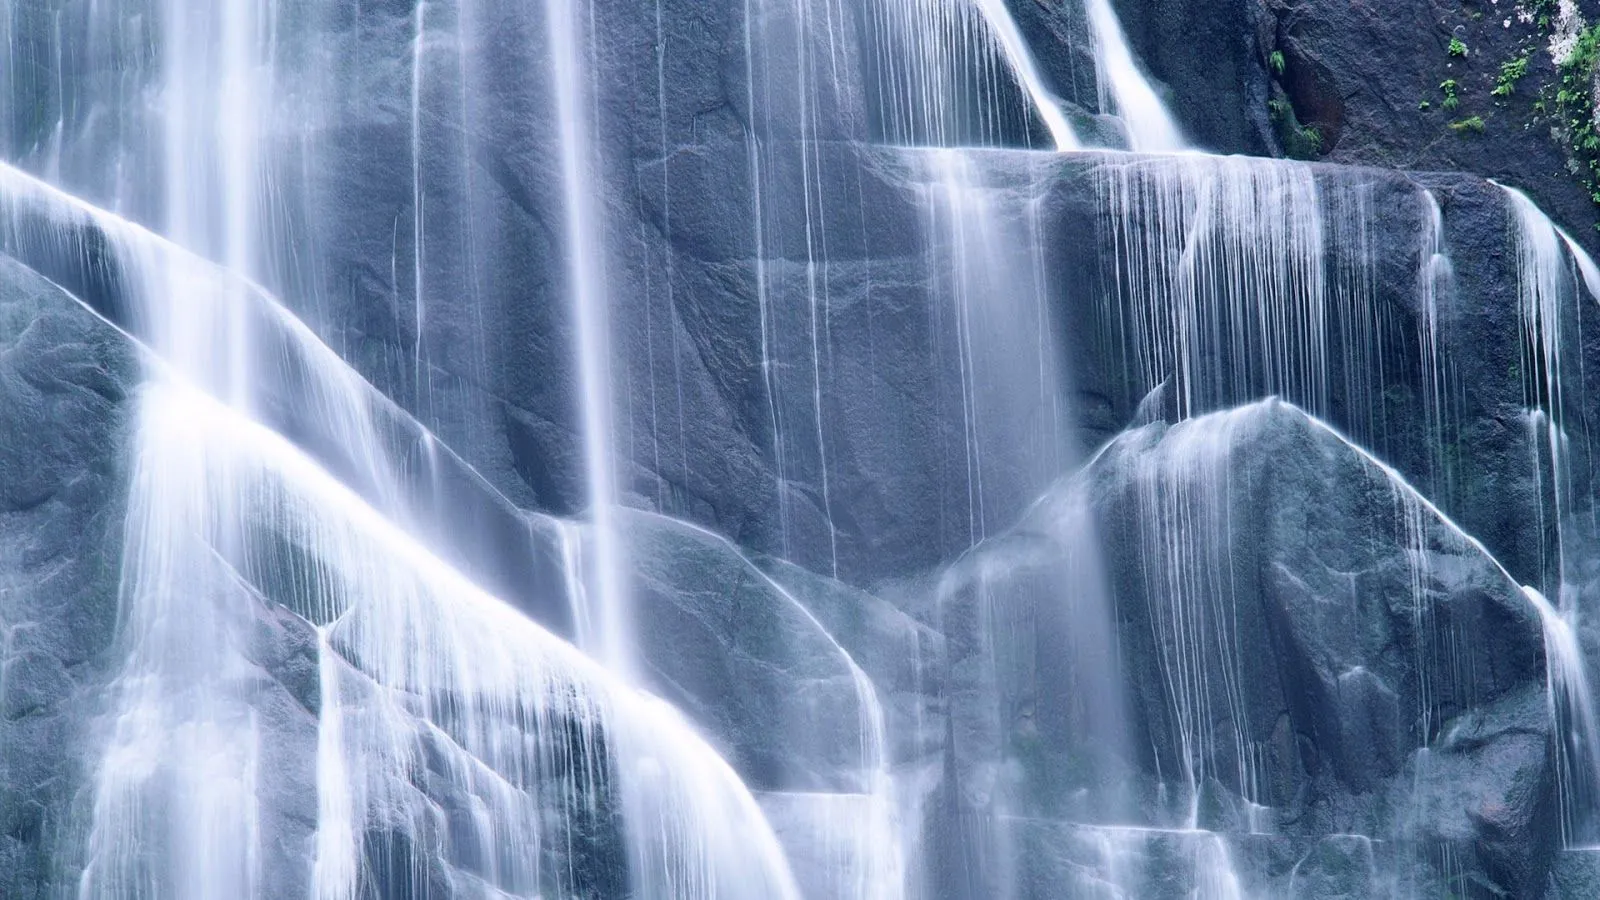 Imágenes Hilandy: Fondo de pantalla Naturaleza cascada deagua ...